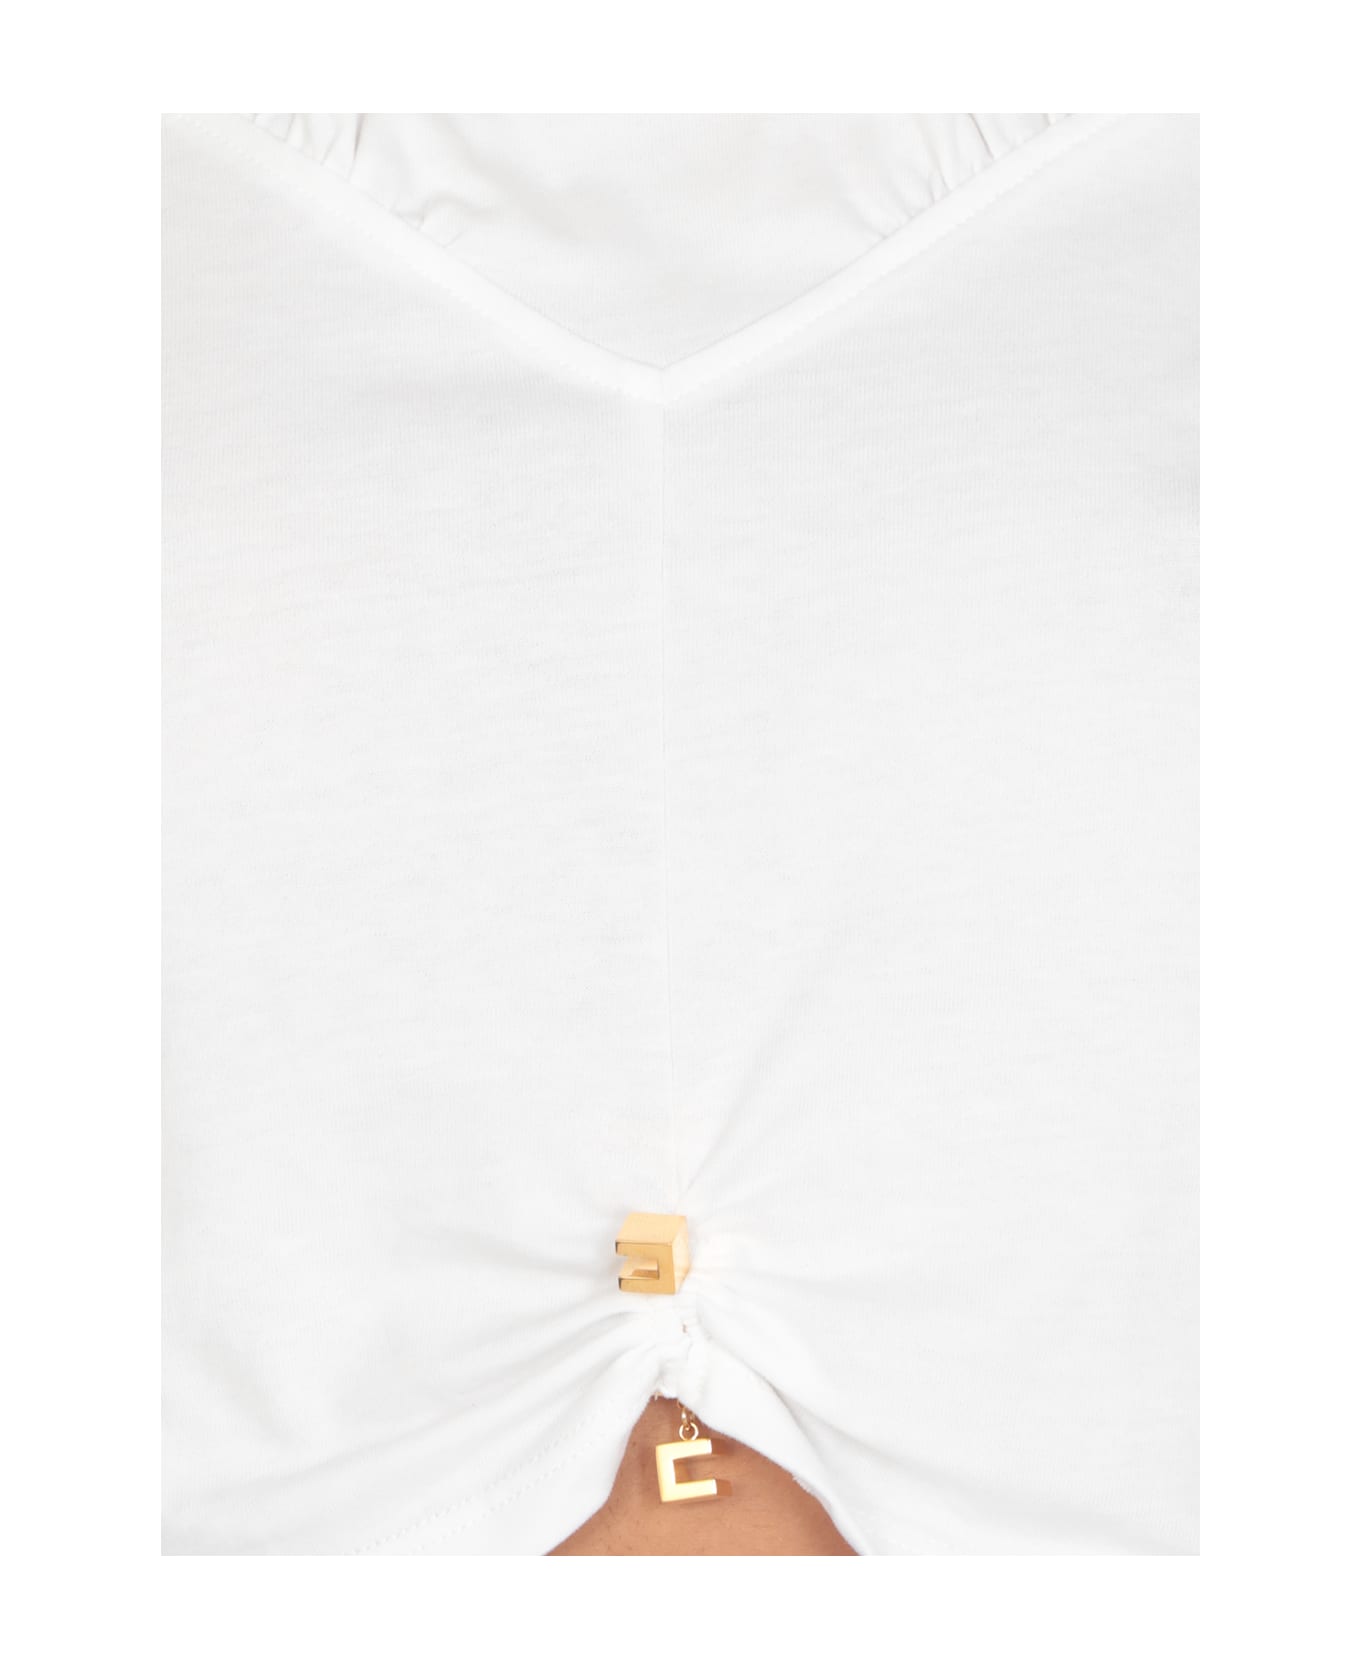 Elisabetta Franchi T-shirt With Drape - White